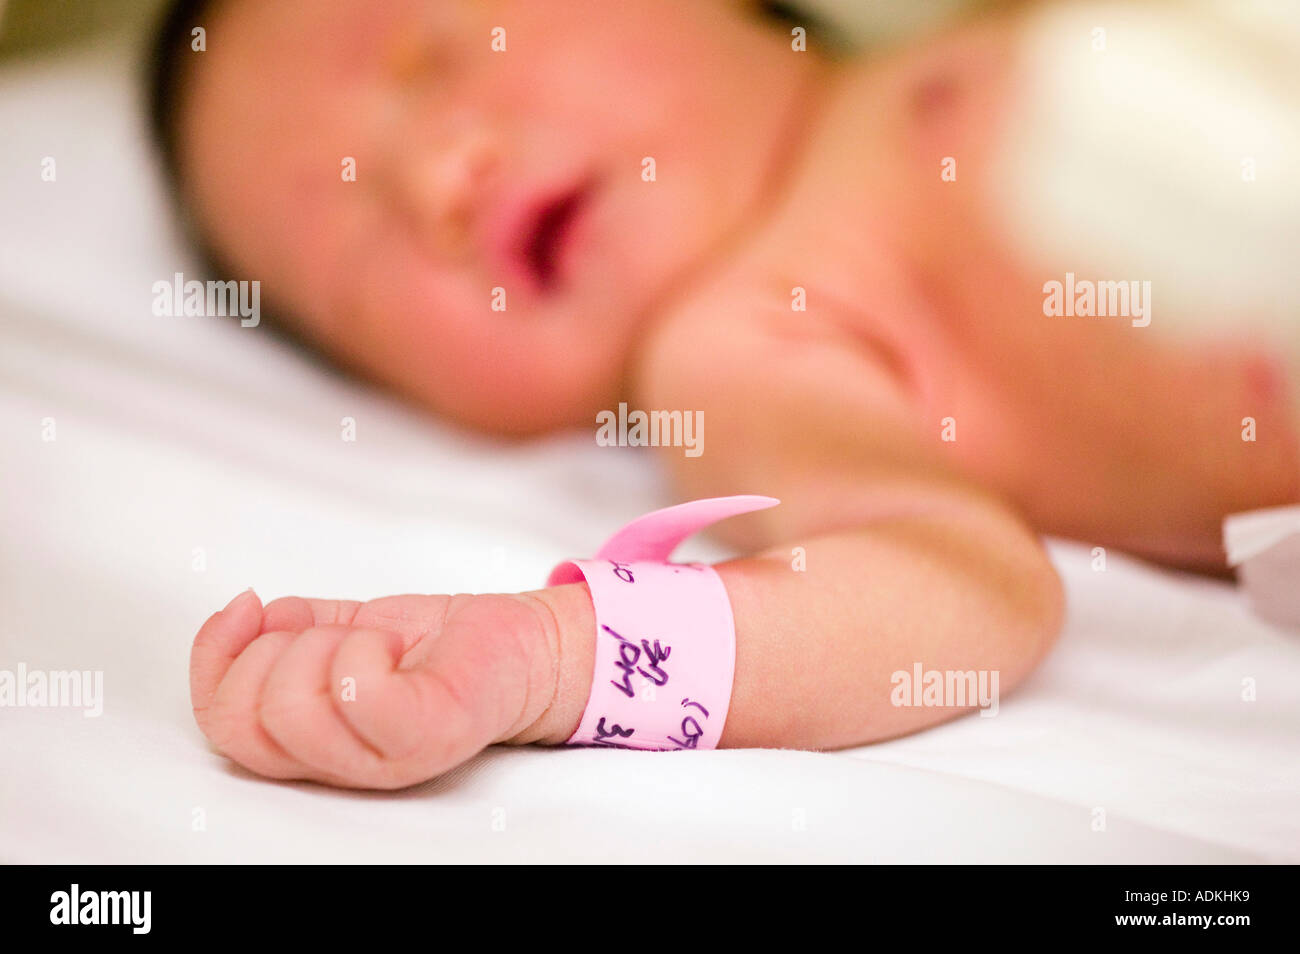 a lying newborn baby Stock Photo